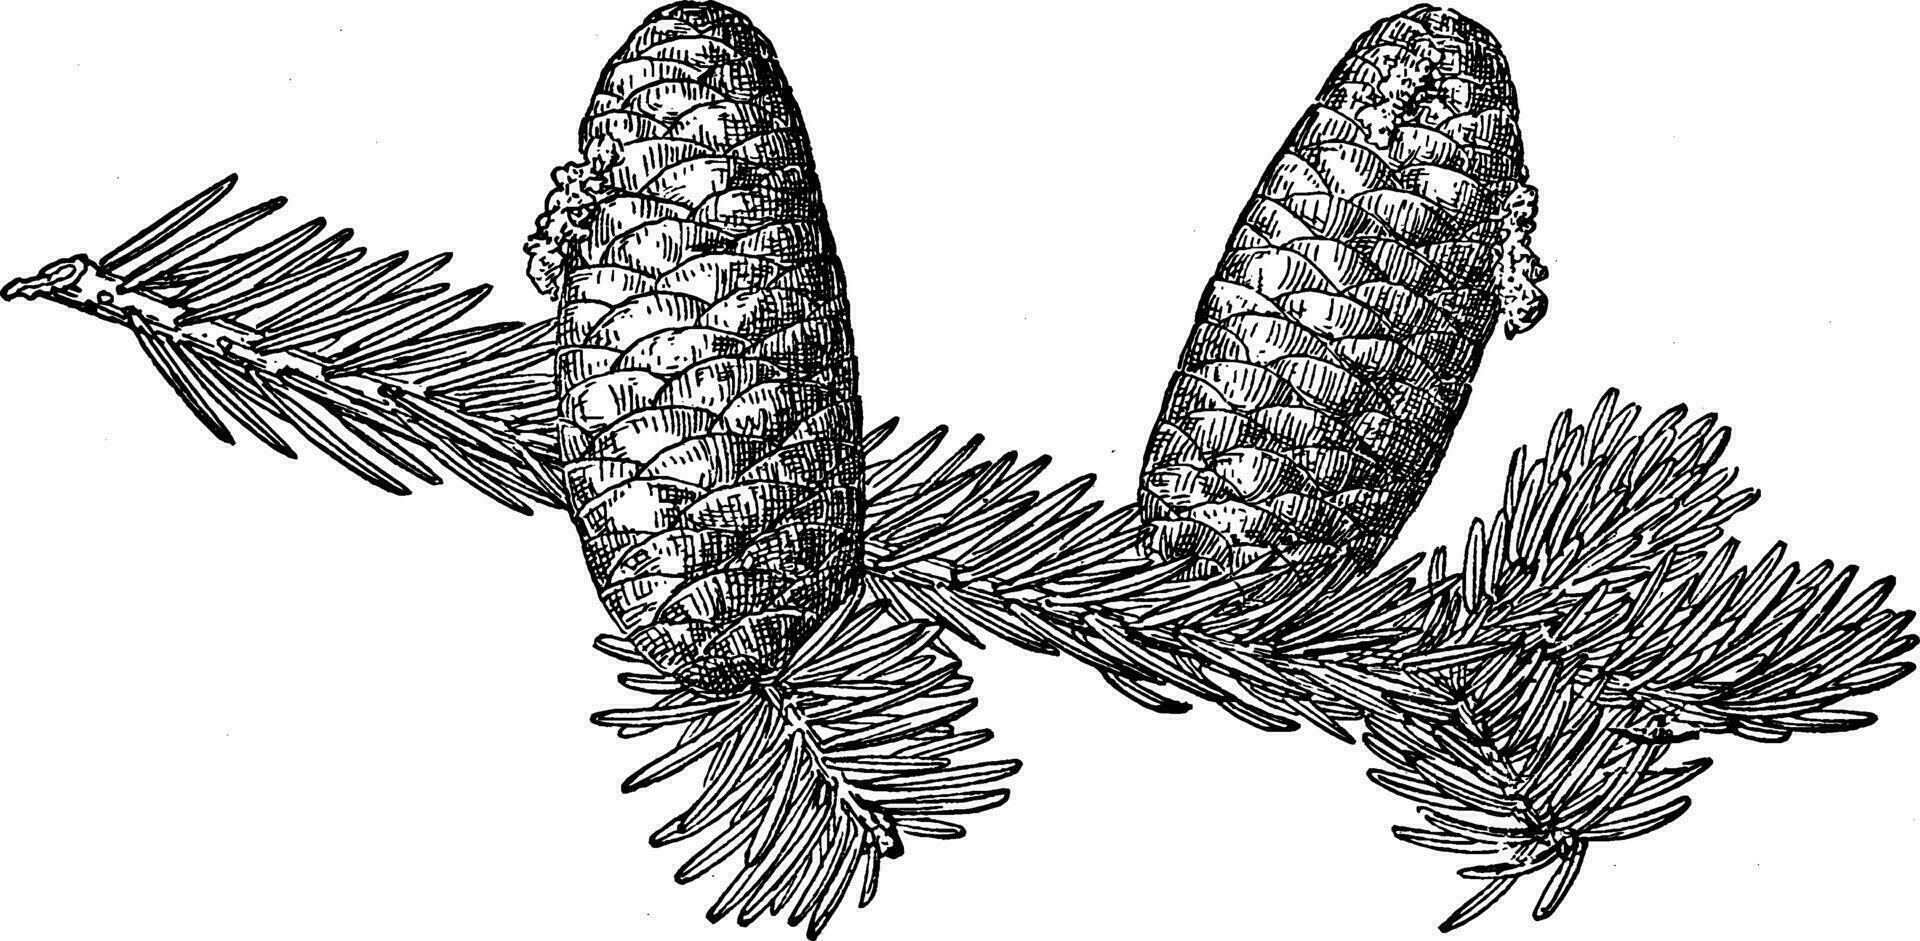 pino cono de rocoso montaña abeto Clásico ilustración. vector